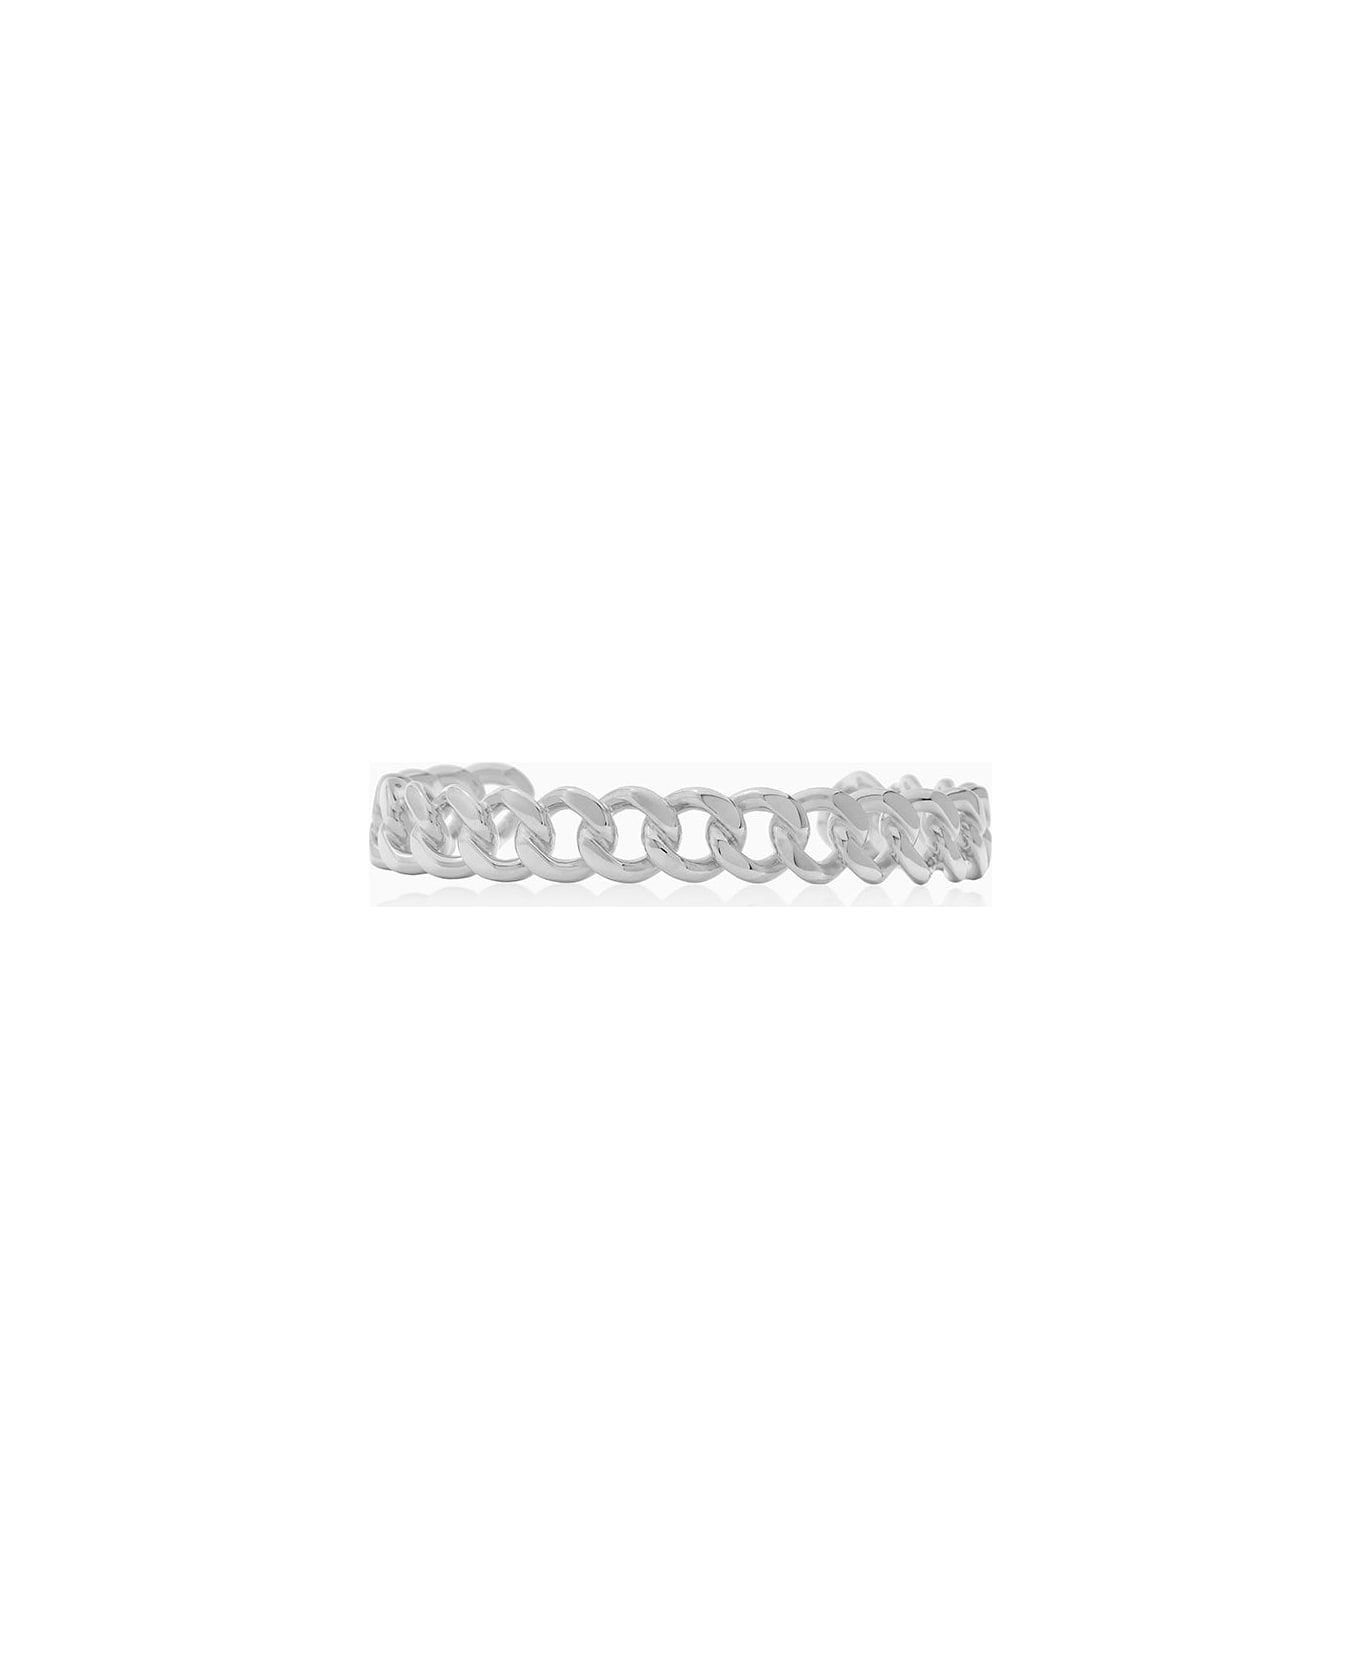 Federica Tosi Bracelet Chain Silver - SILVER